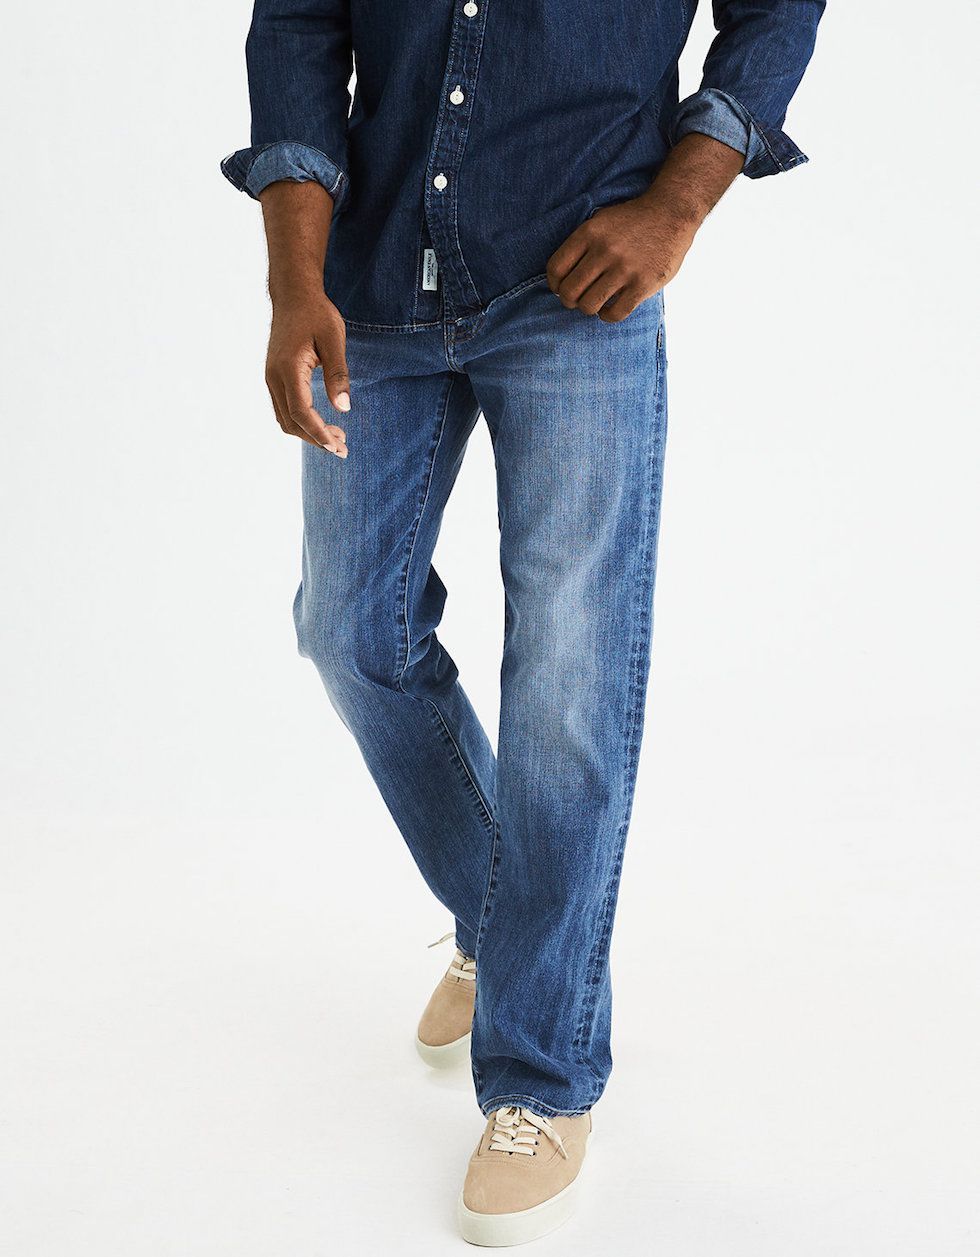 Buy > american eagle flex jeans > in stock